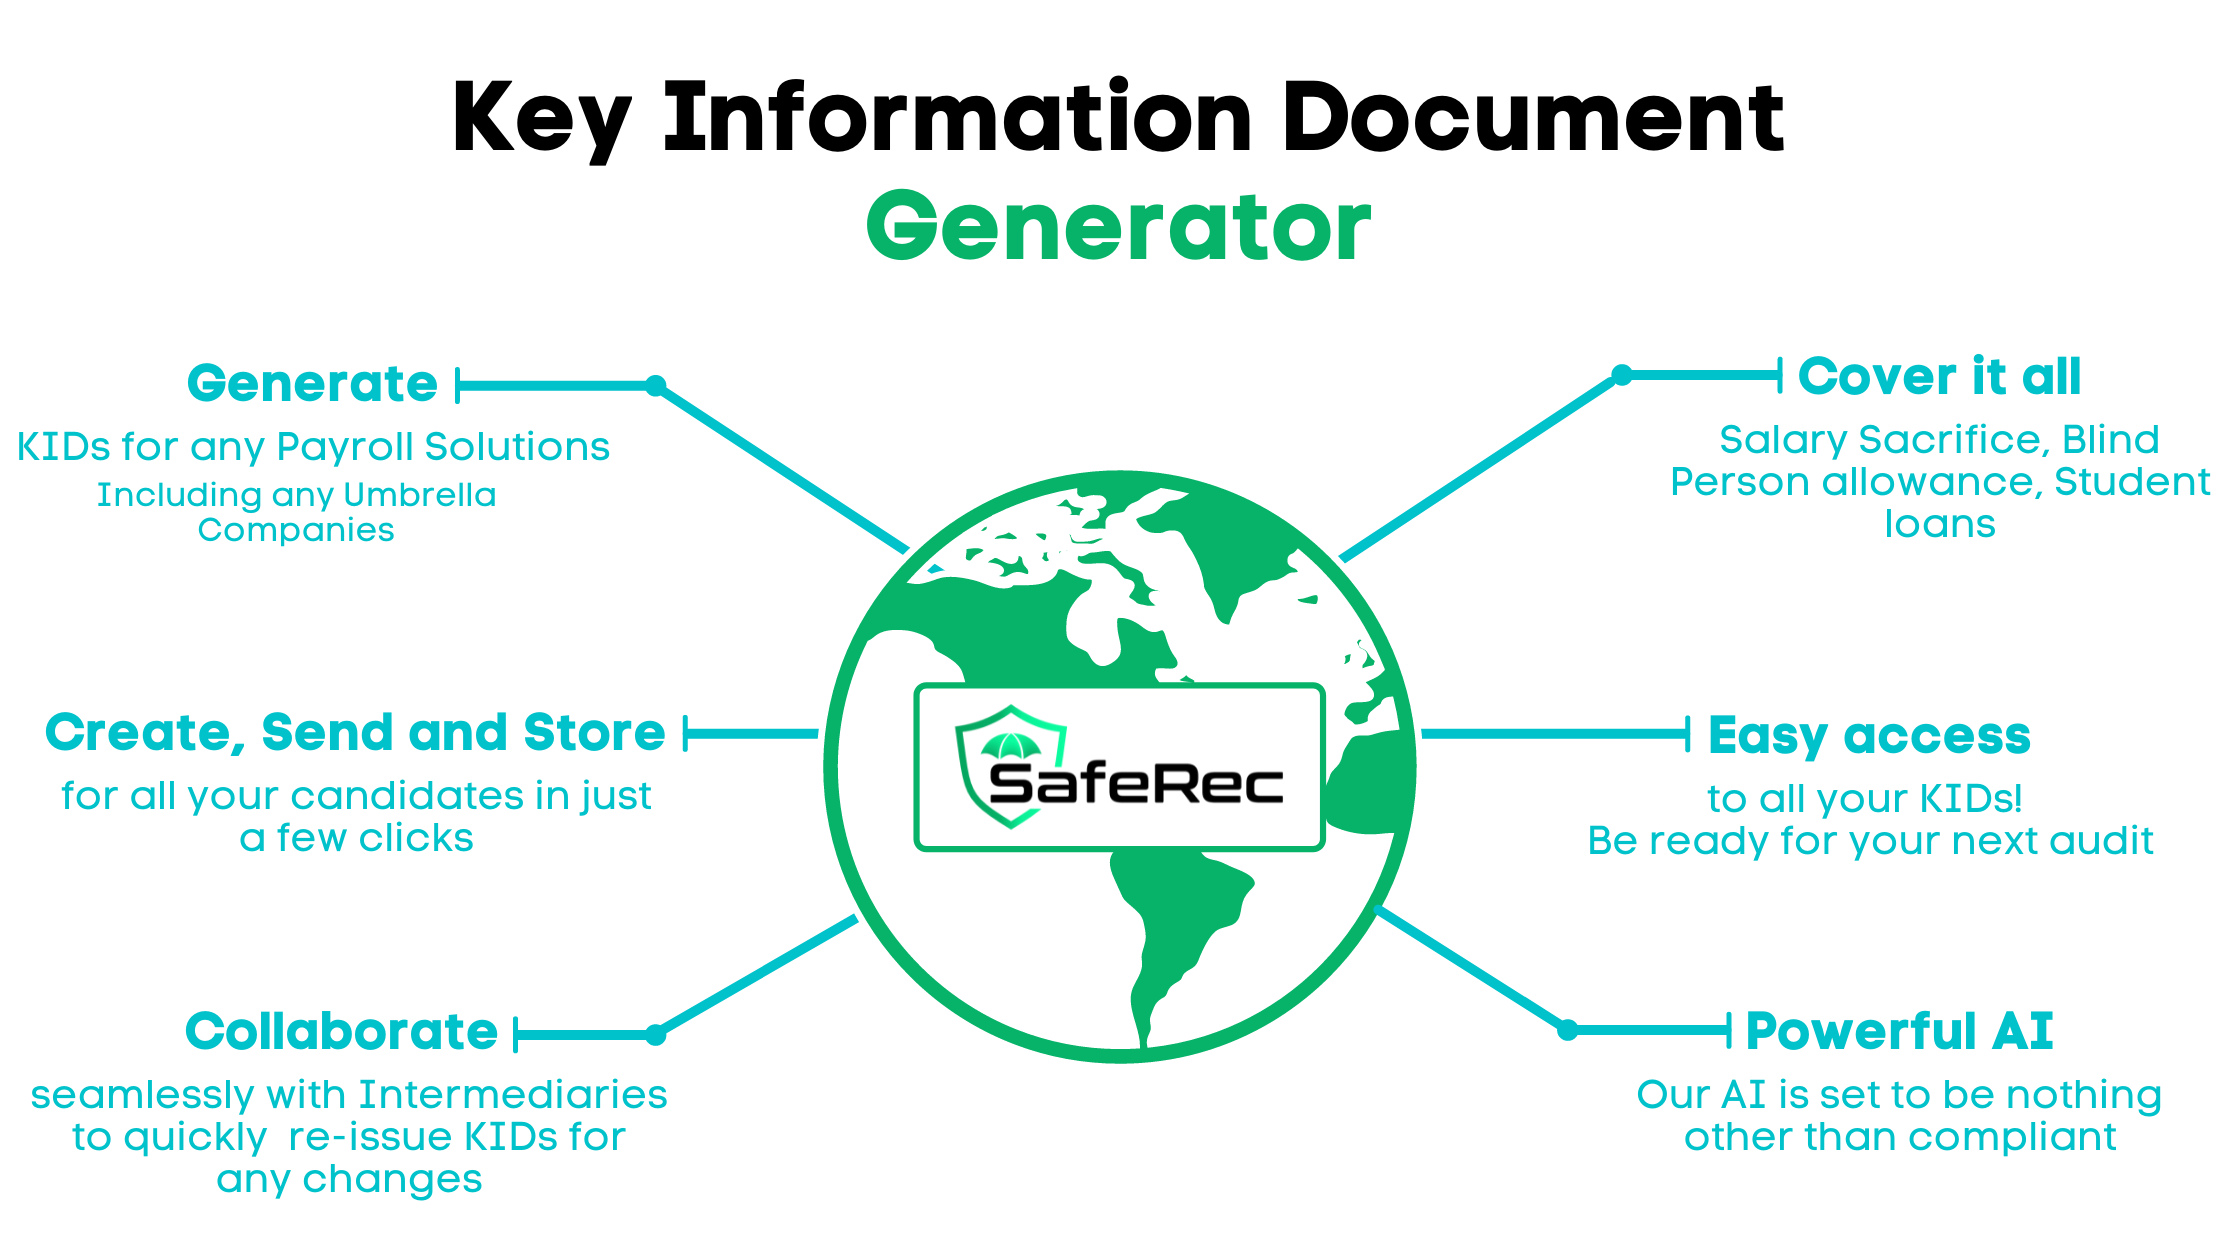 Key Information Document Generator